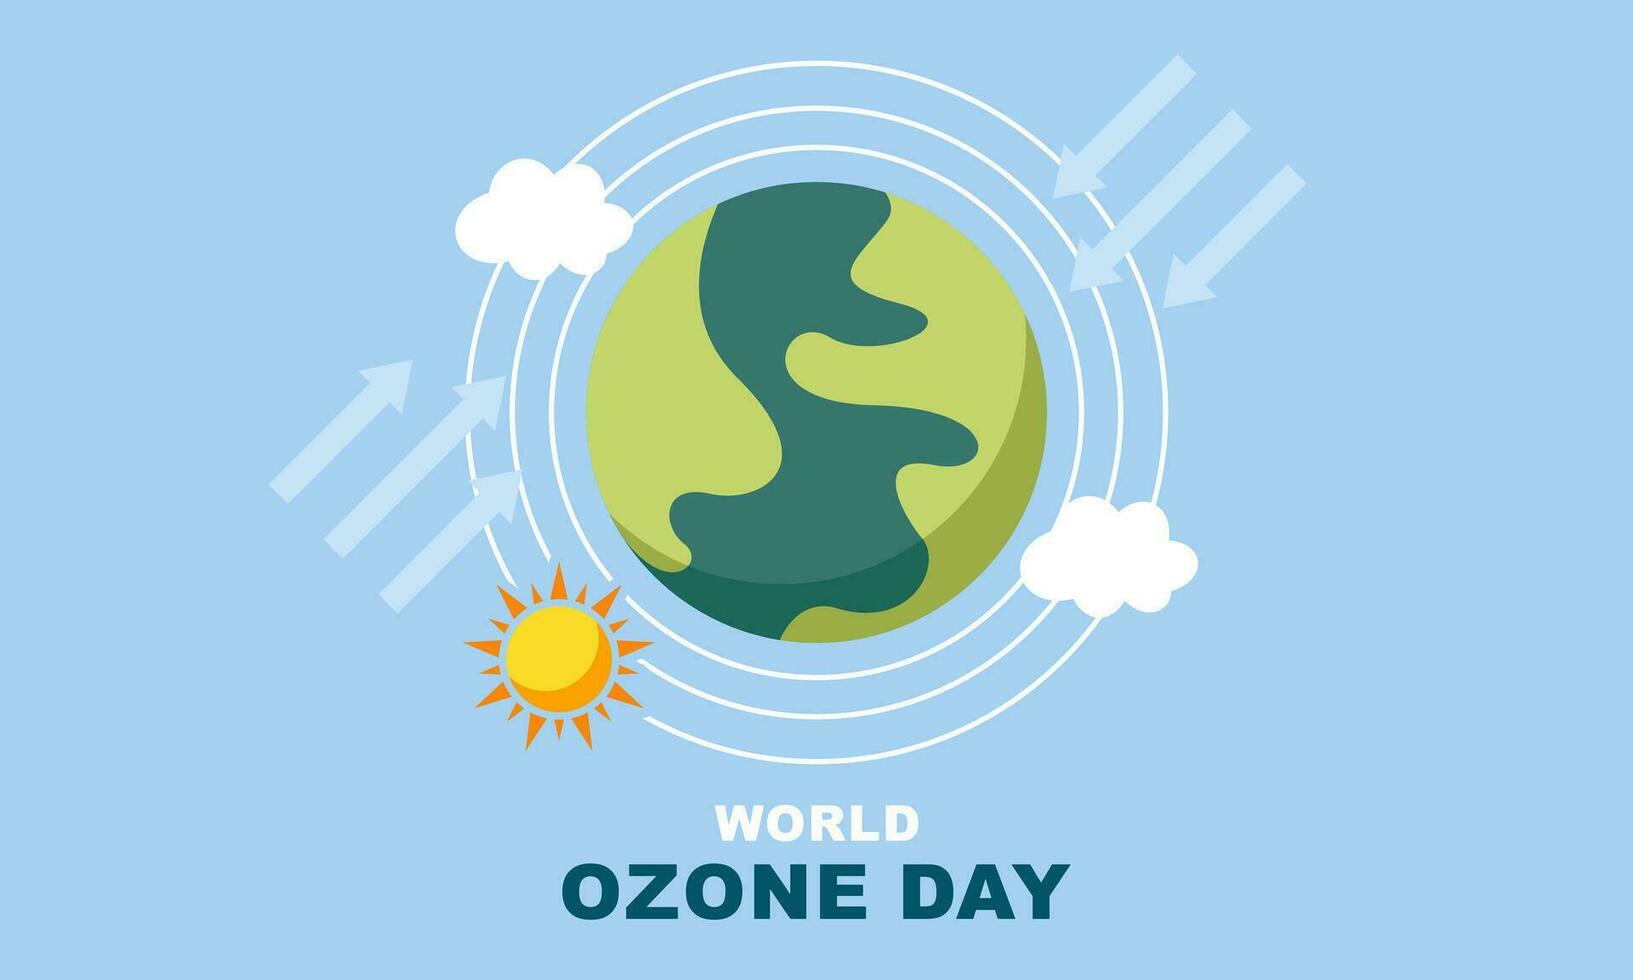 Hand drawn world ozone day background vector